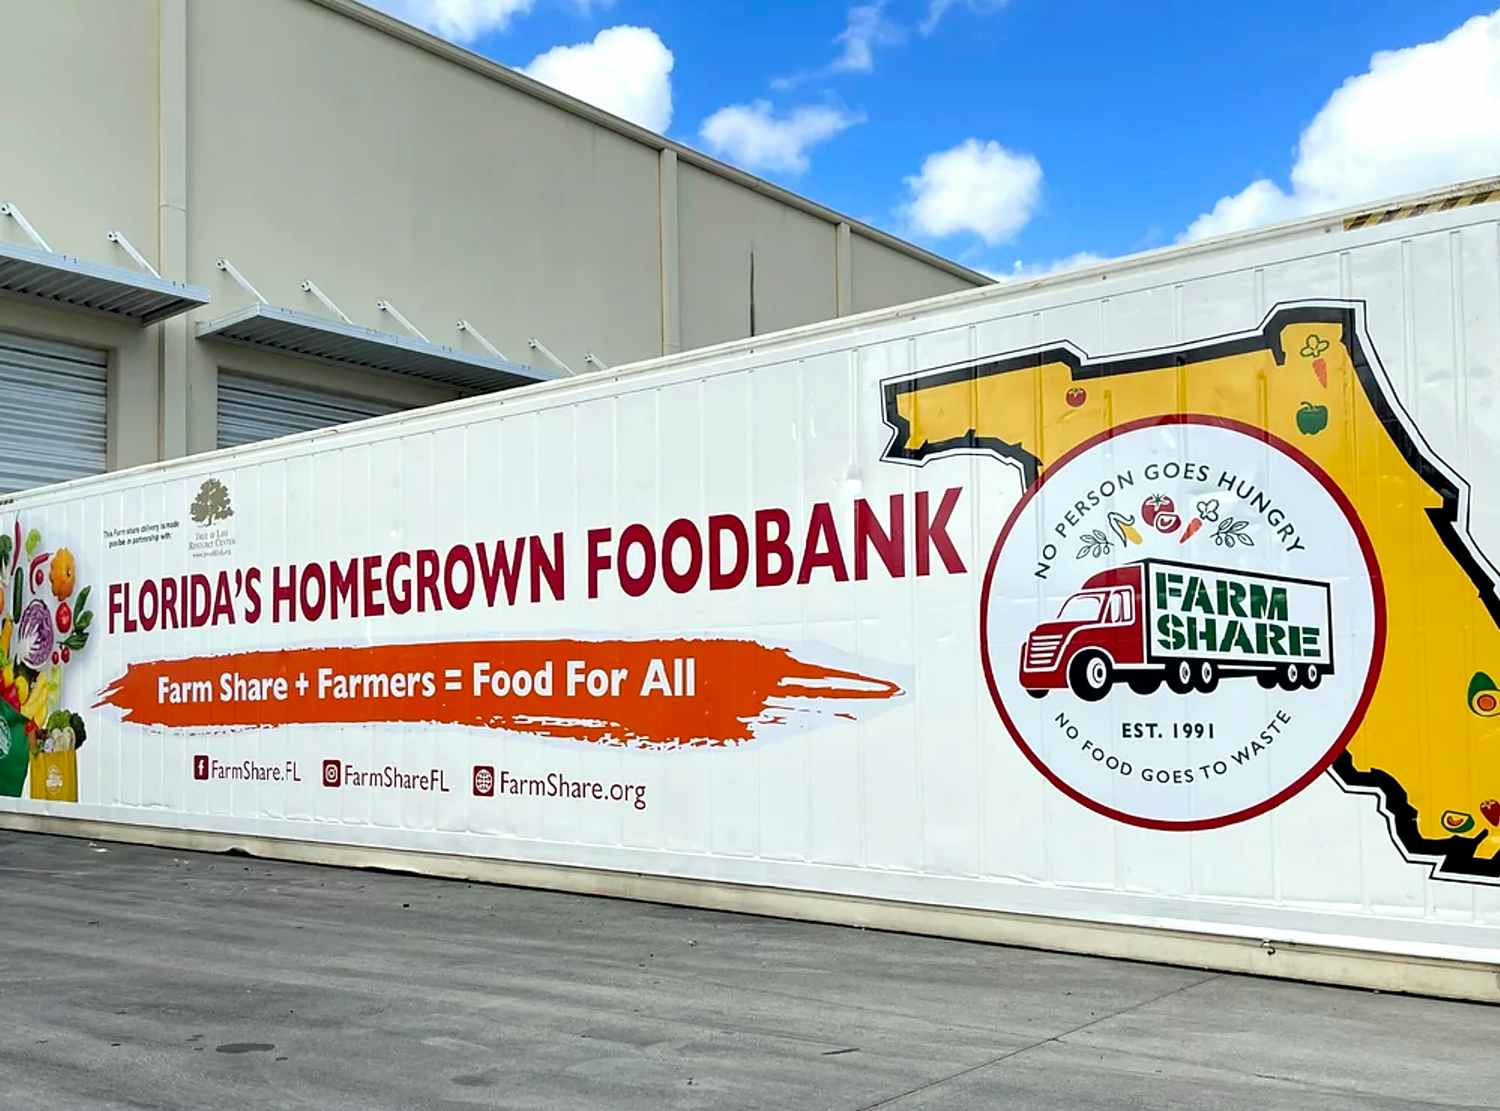 farm share florida's homegrown foodbank semi truck